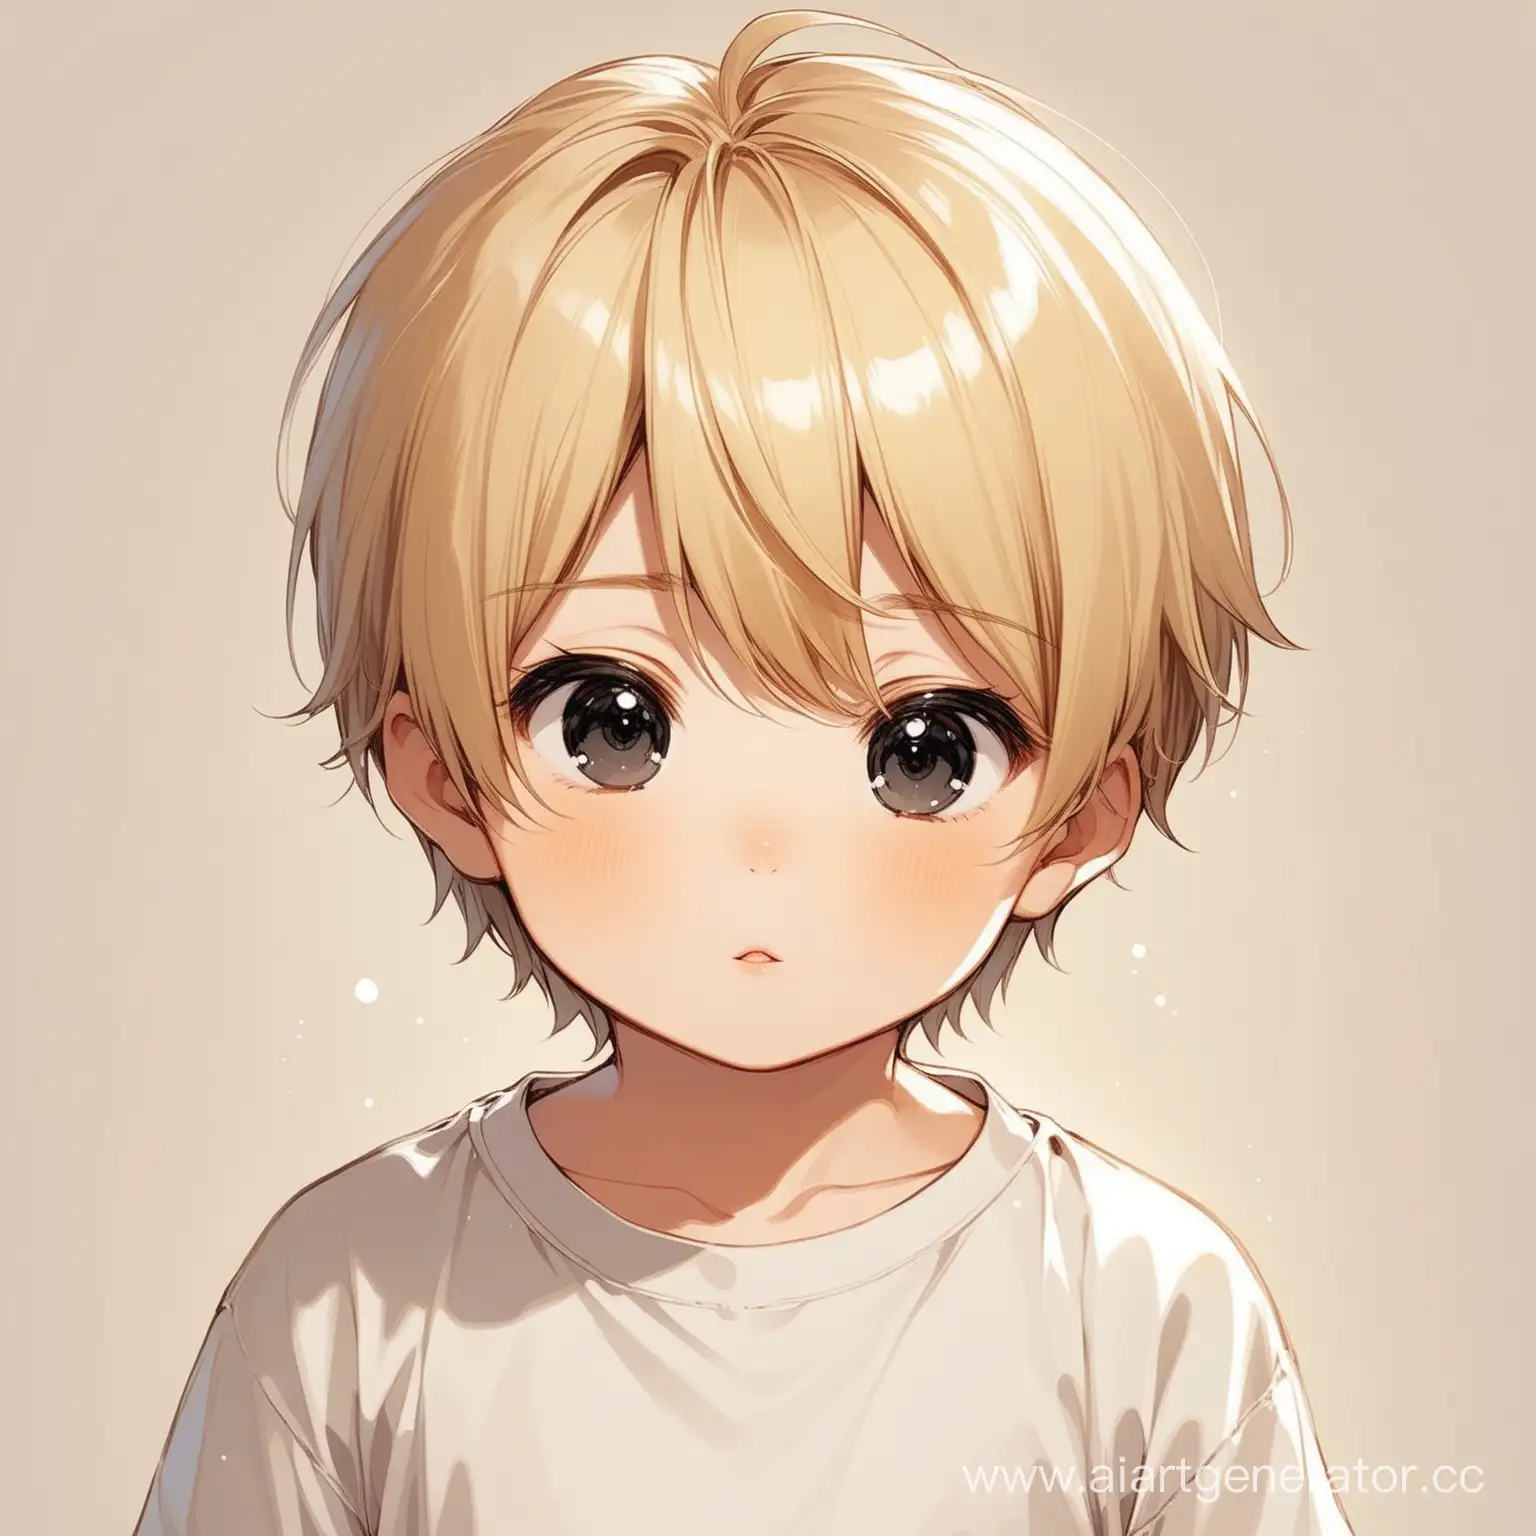 Cute little boy, short blond hair, black eyes